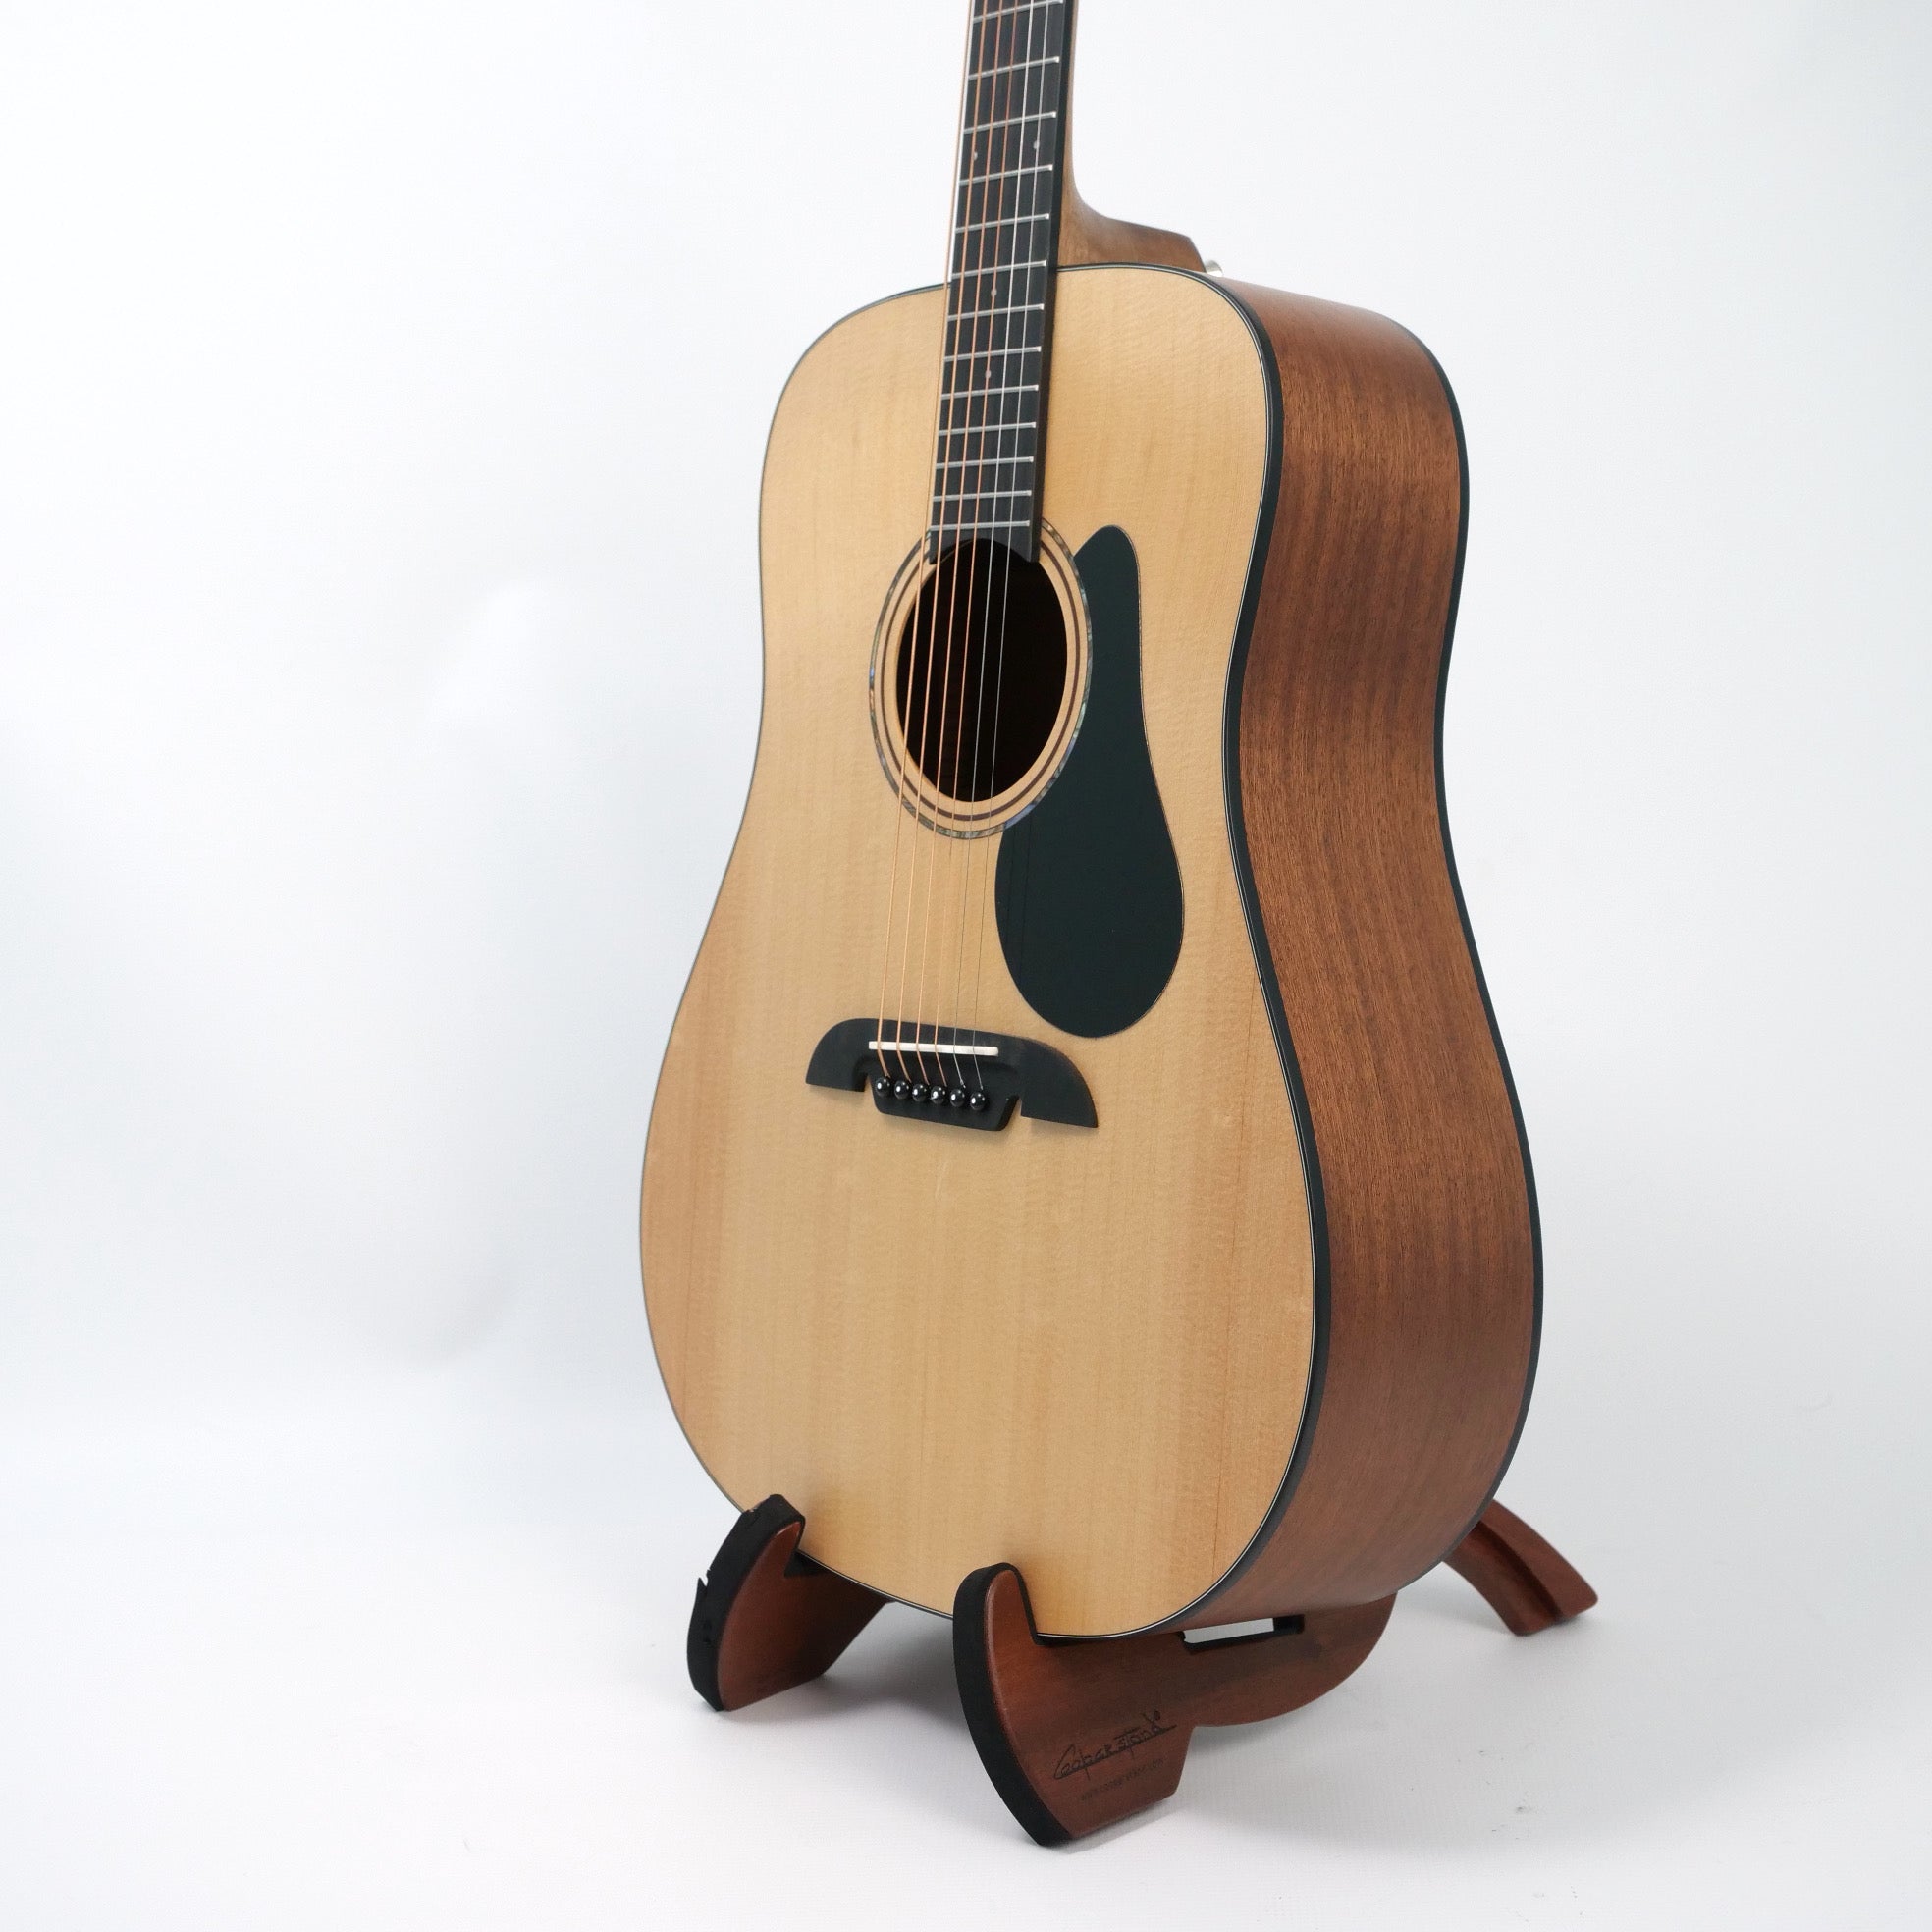 Alvarez Artist AD30 Solid Spruce Acoustic Guitar